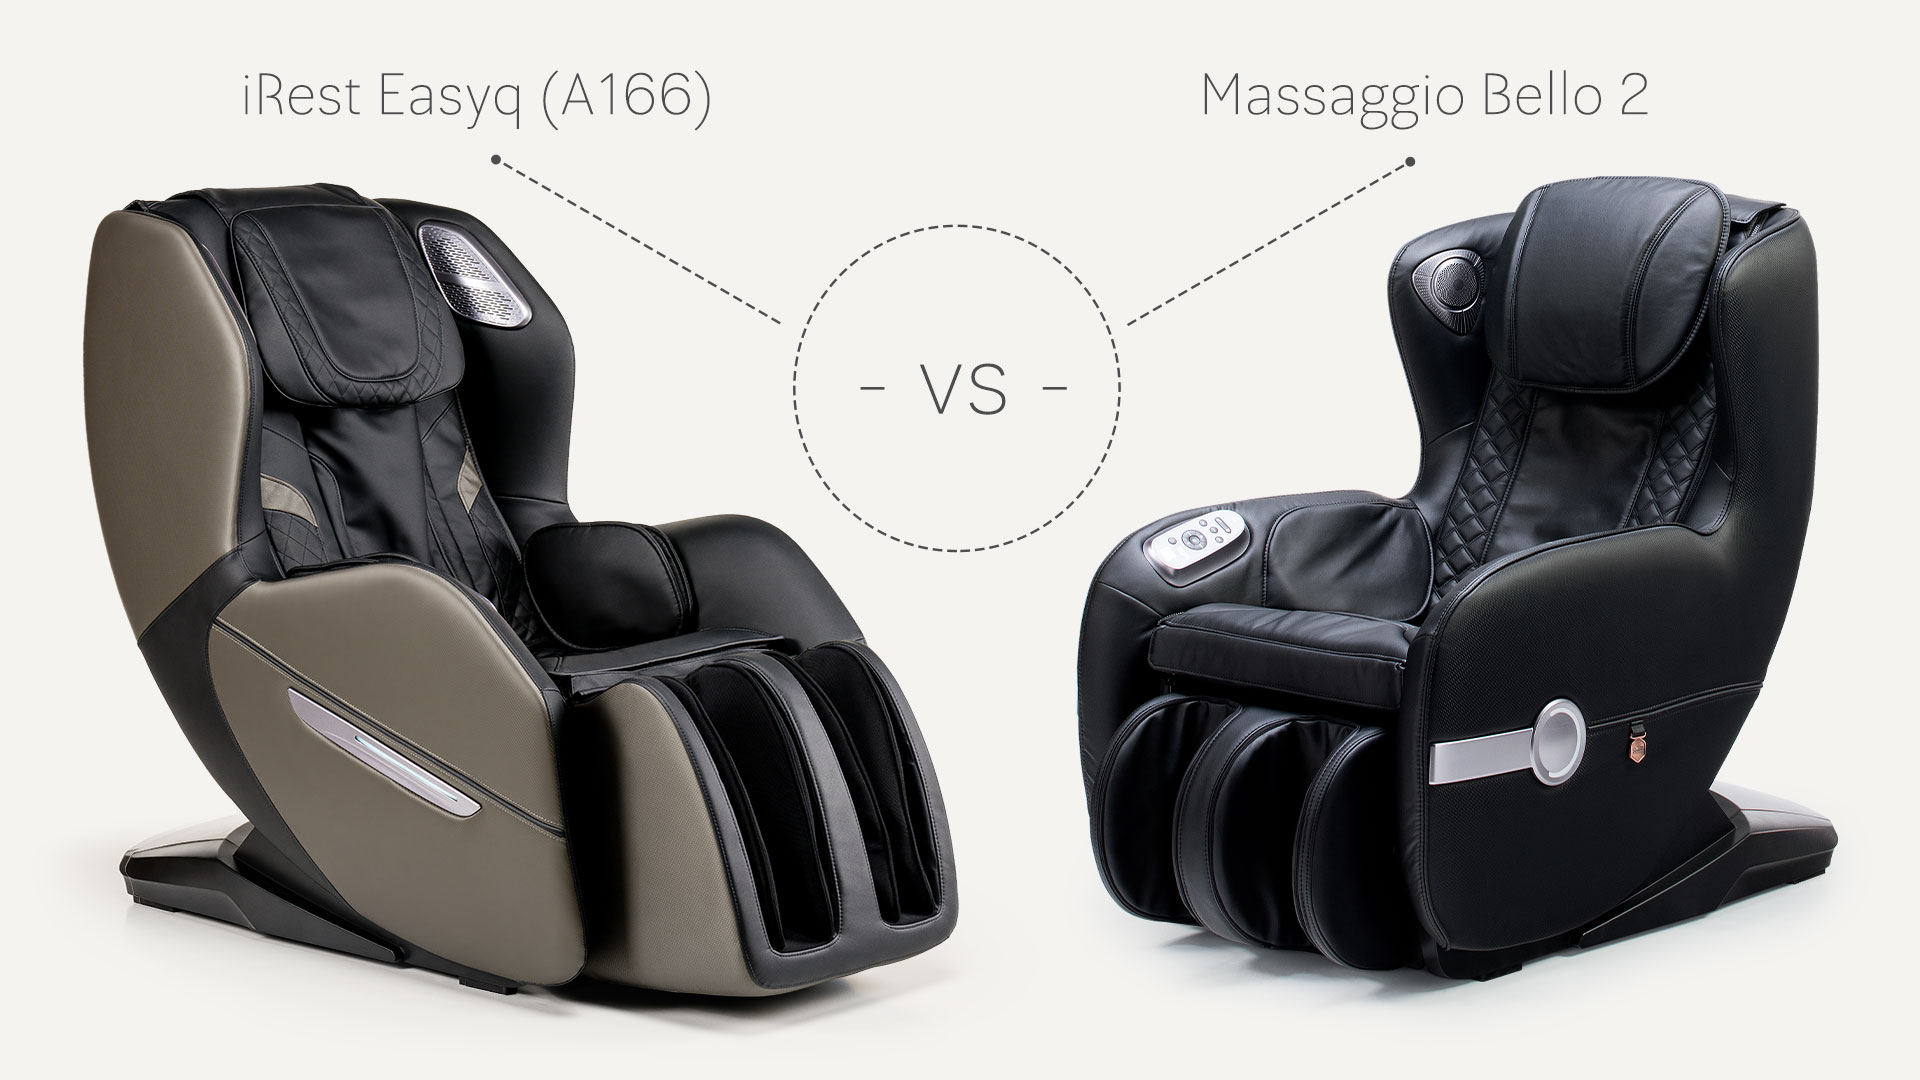 fotele-masujace-easyqA166-vs-bello2